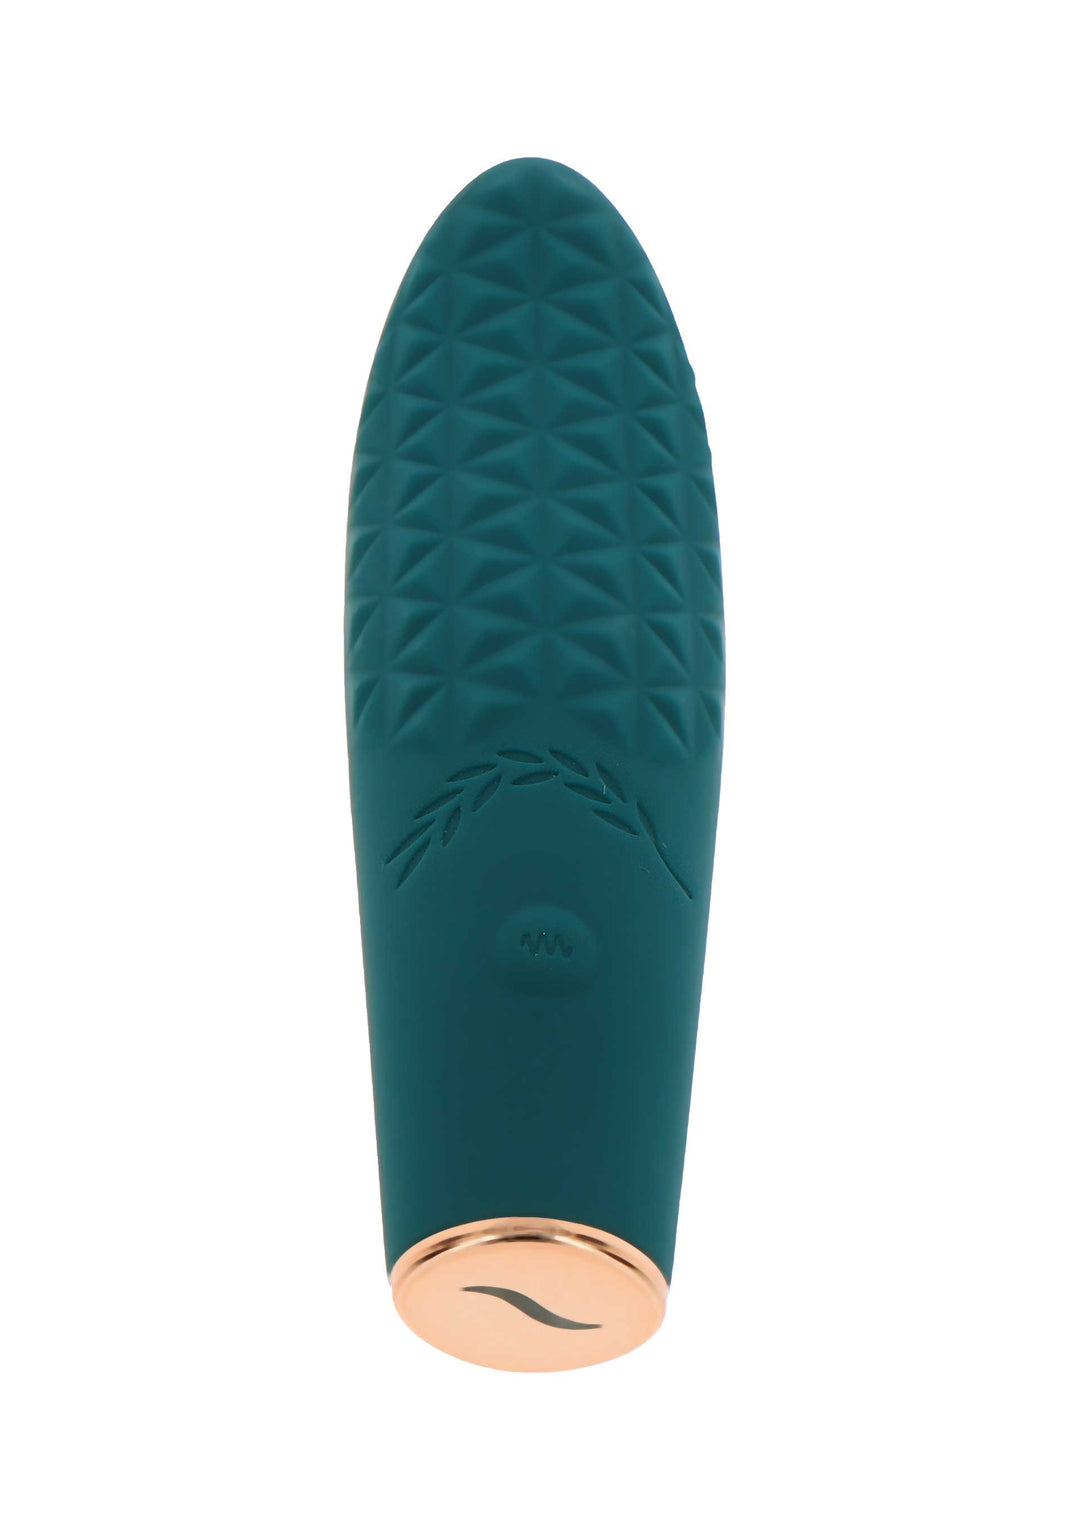 Alyssa Textured Stimulator classic vaginal vibrator